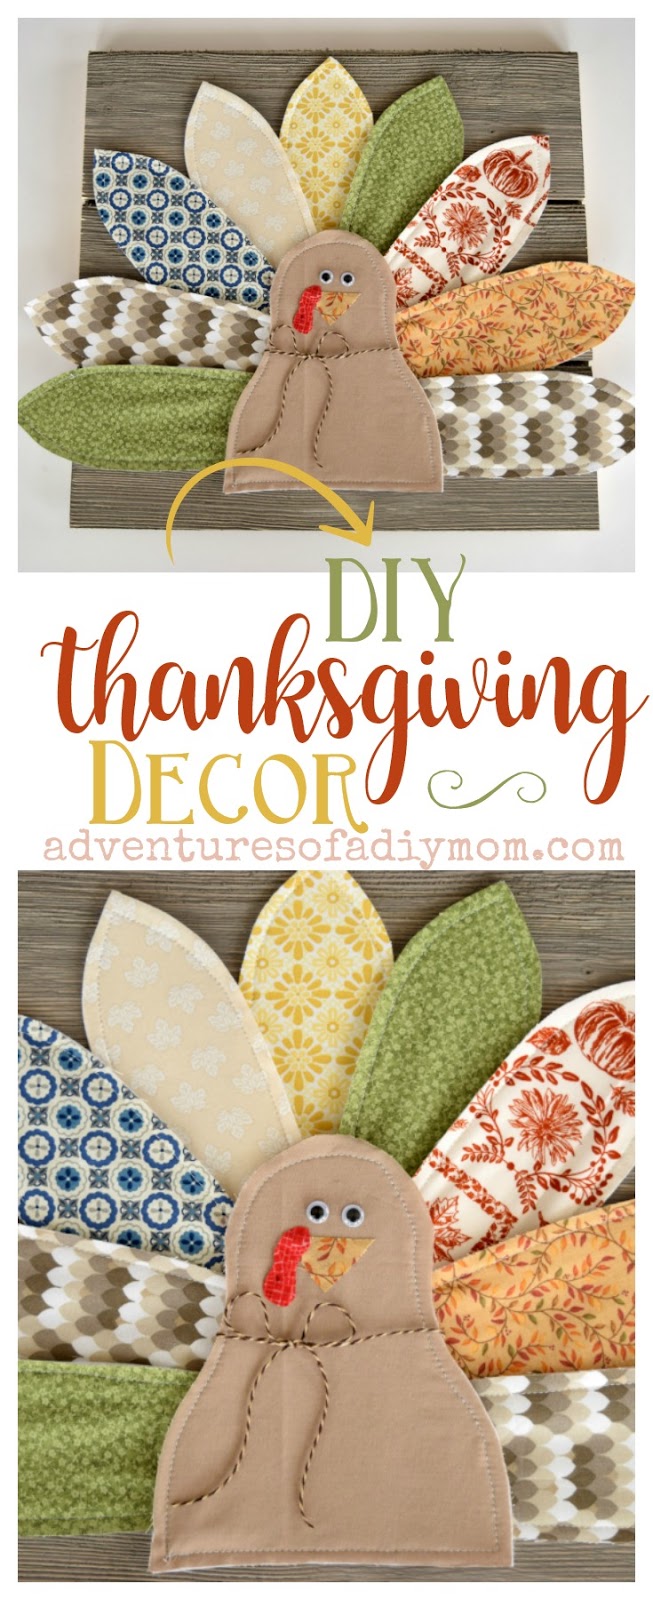 DIY Thanksgiving Home Decor - Fabric Turkey Craft - Adventures of